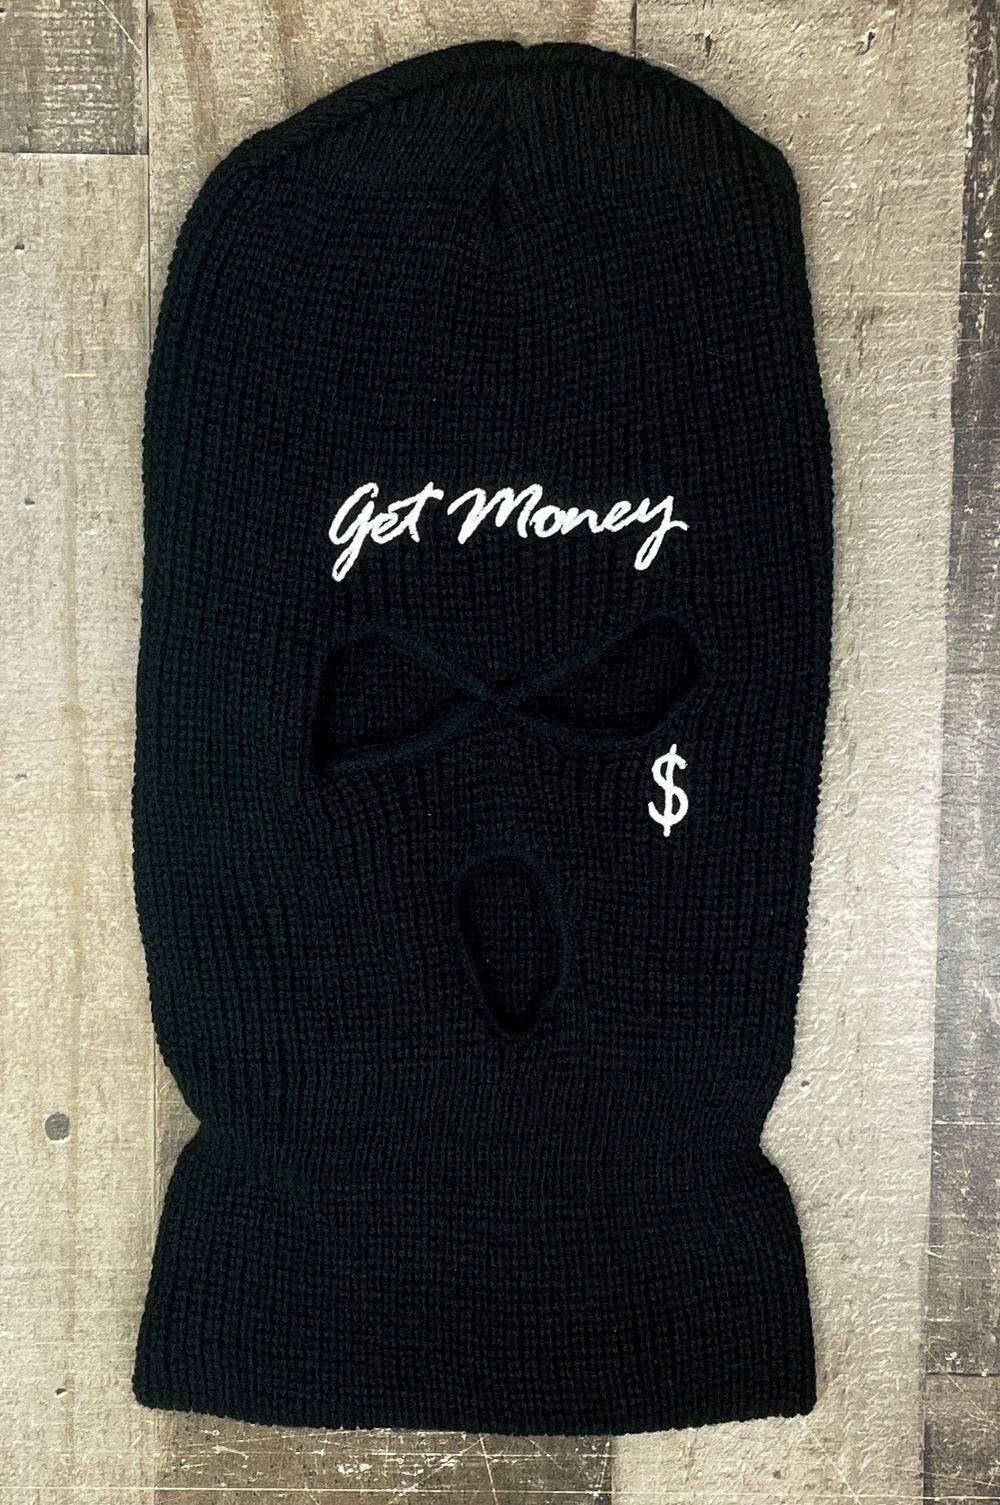 Hasta Muerte- get money ski mask (black)